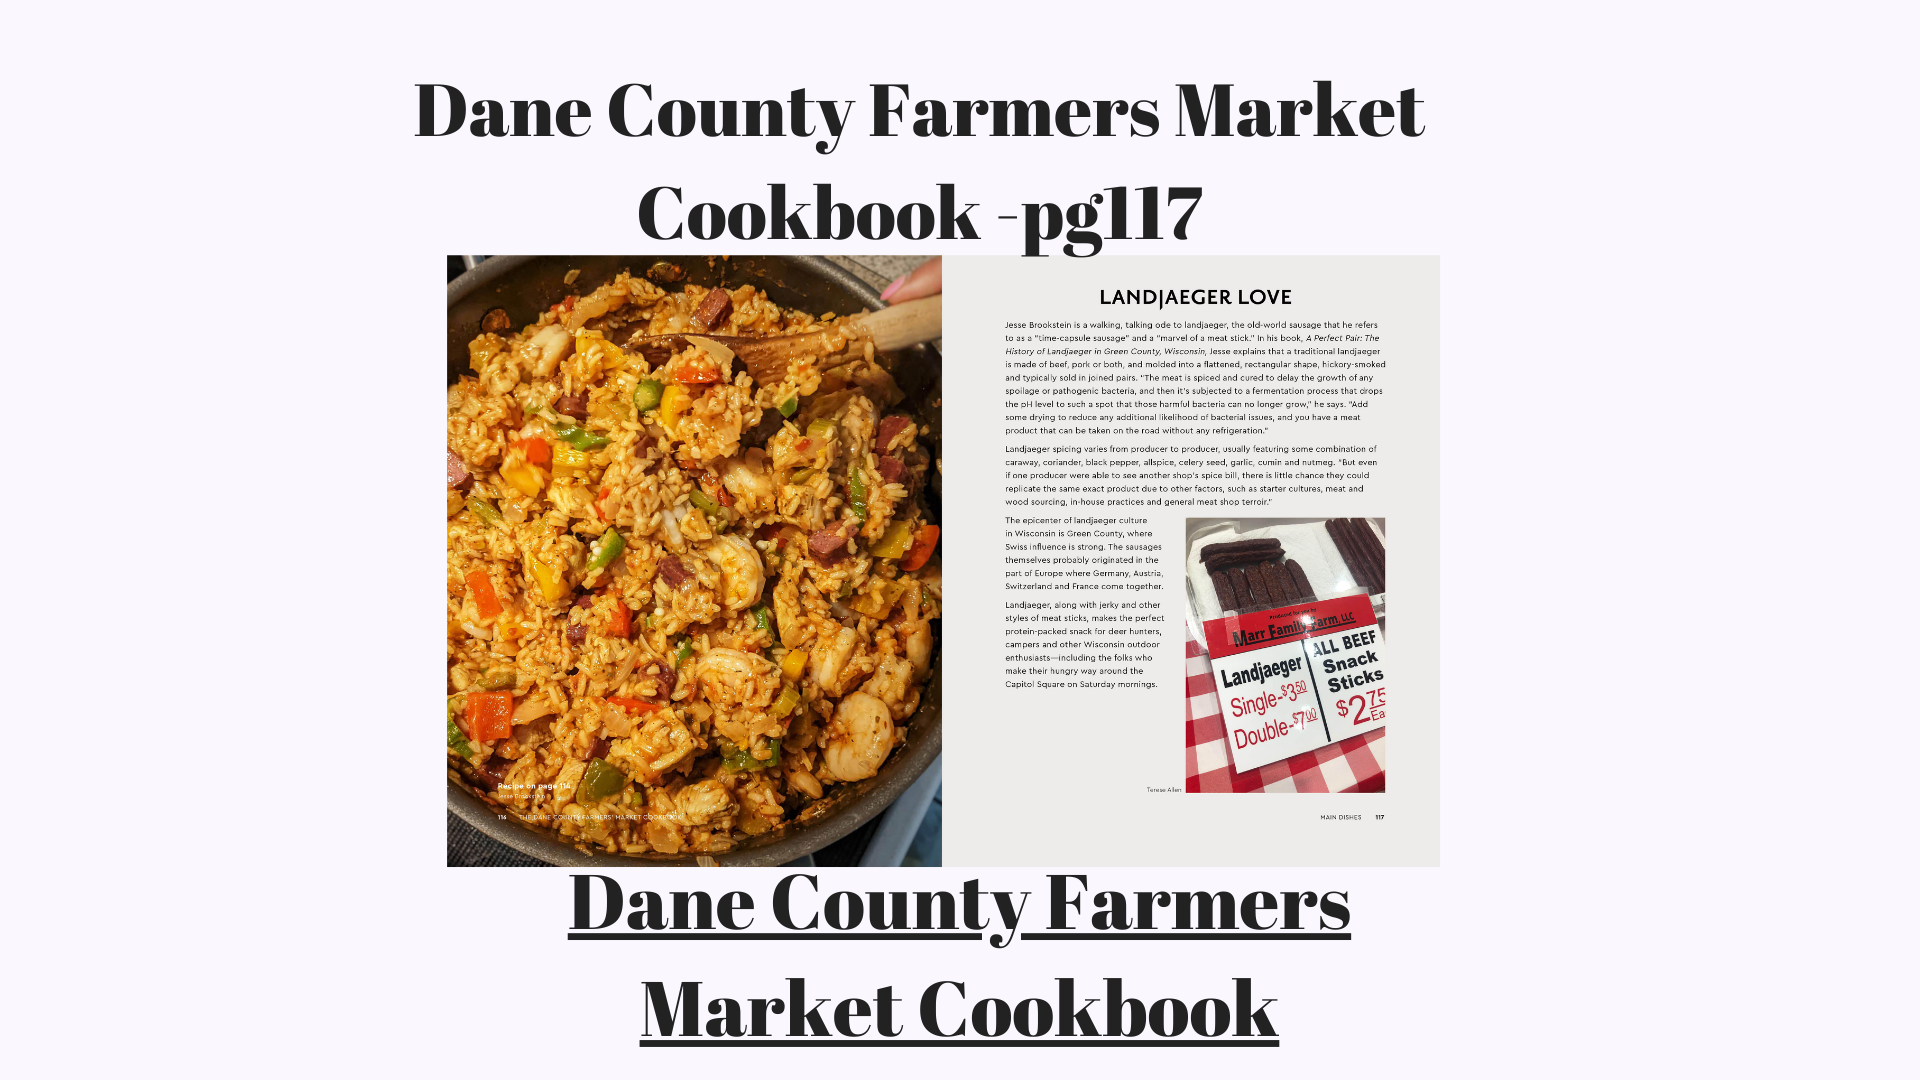 Author Signing Event- Terese Allen Dane County Cookbook 6/30/24